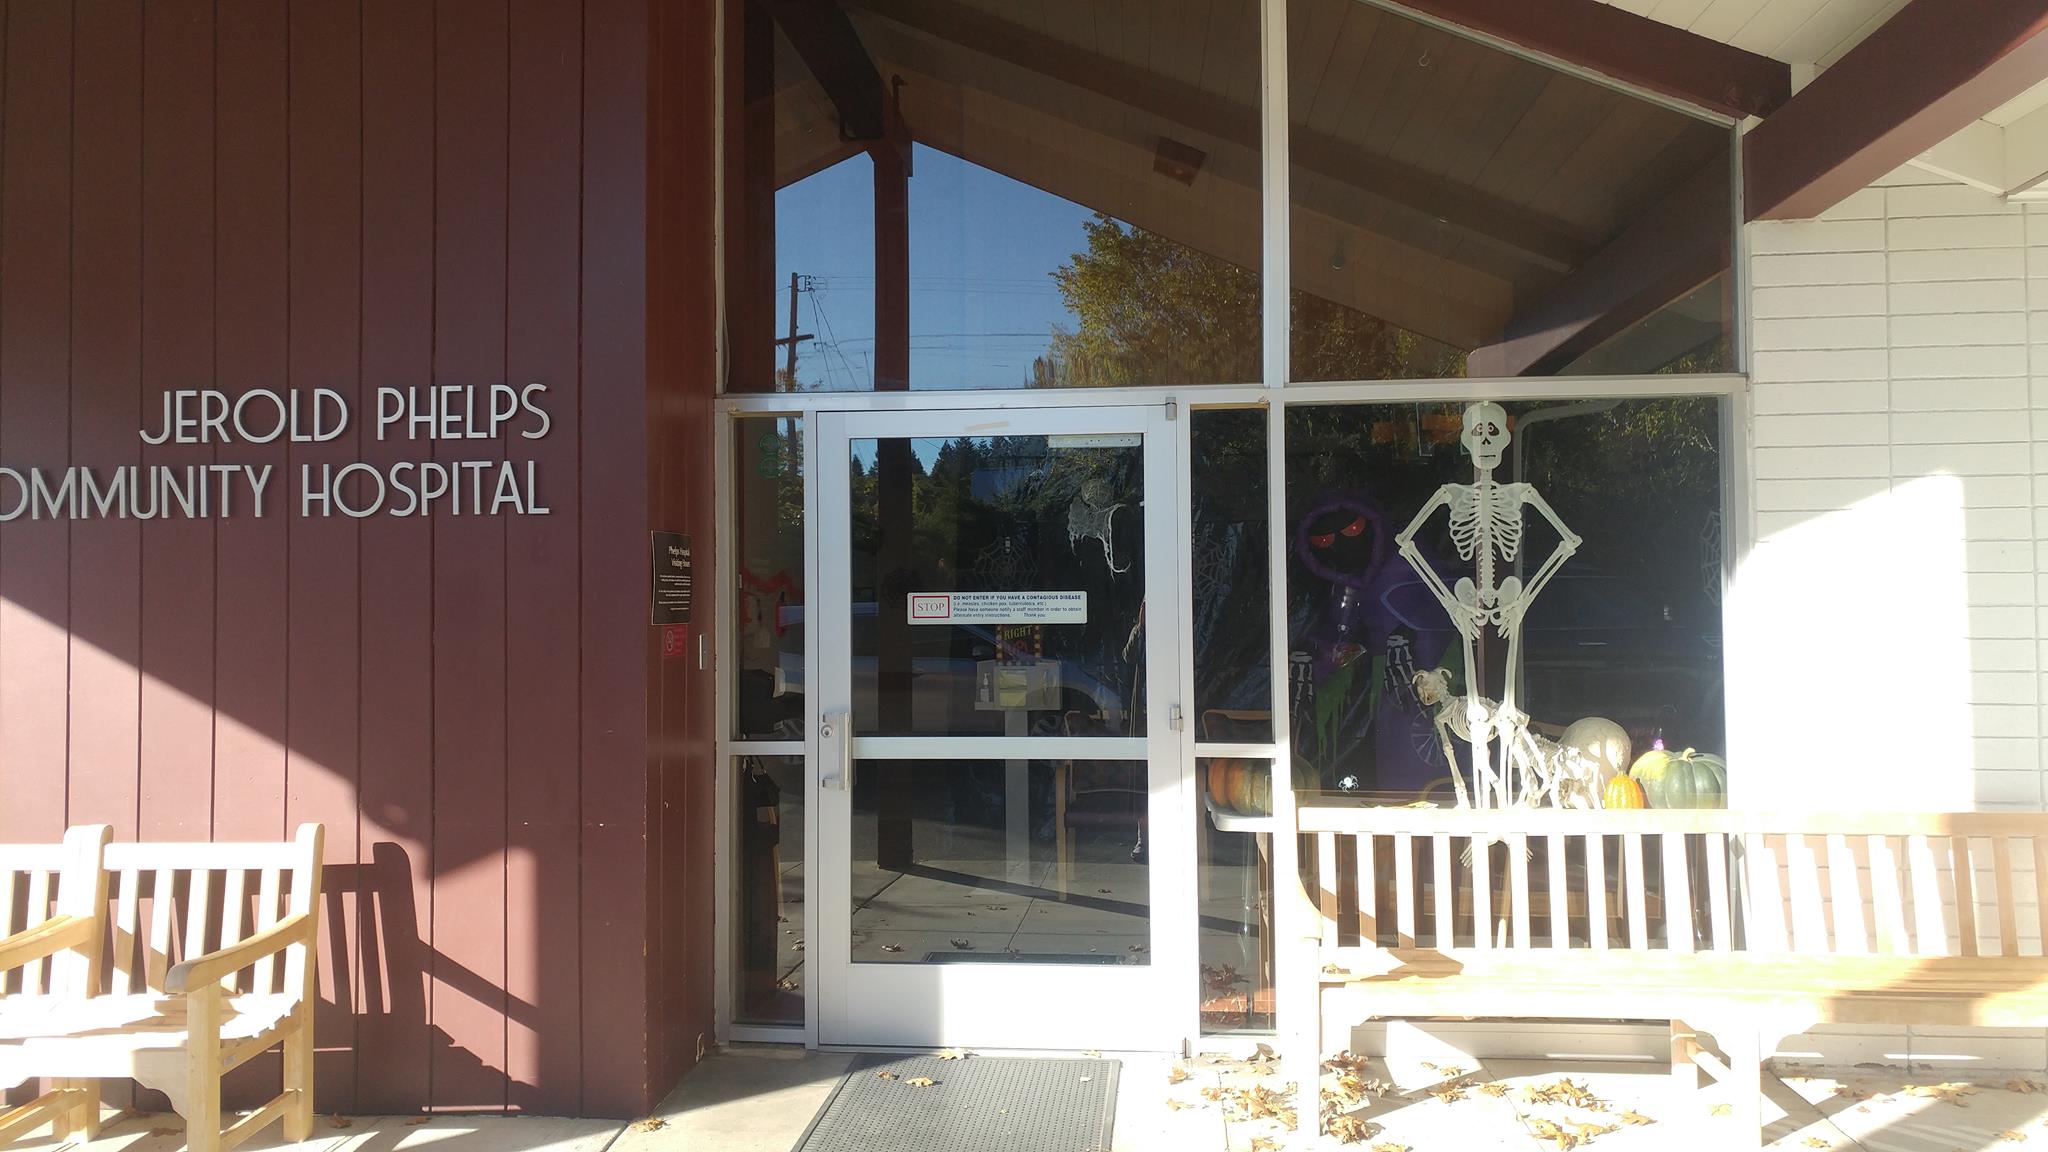 Jerold Phelps Community Hospital Community Clinic